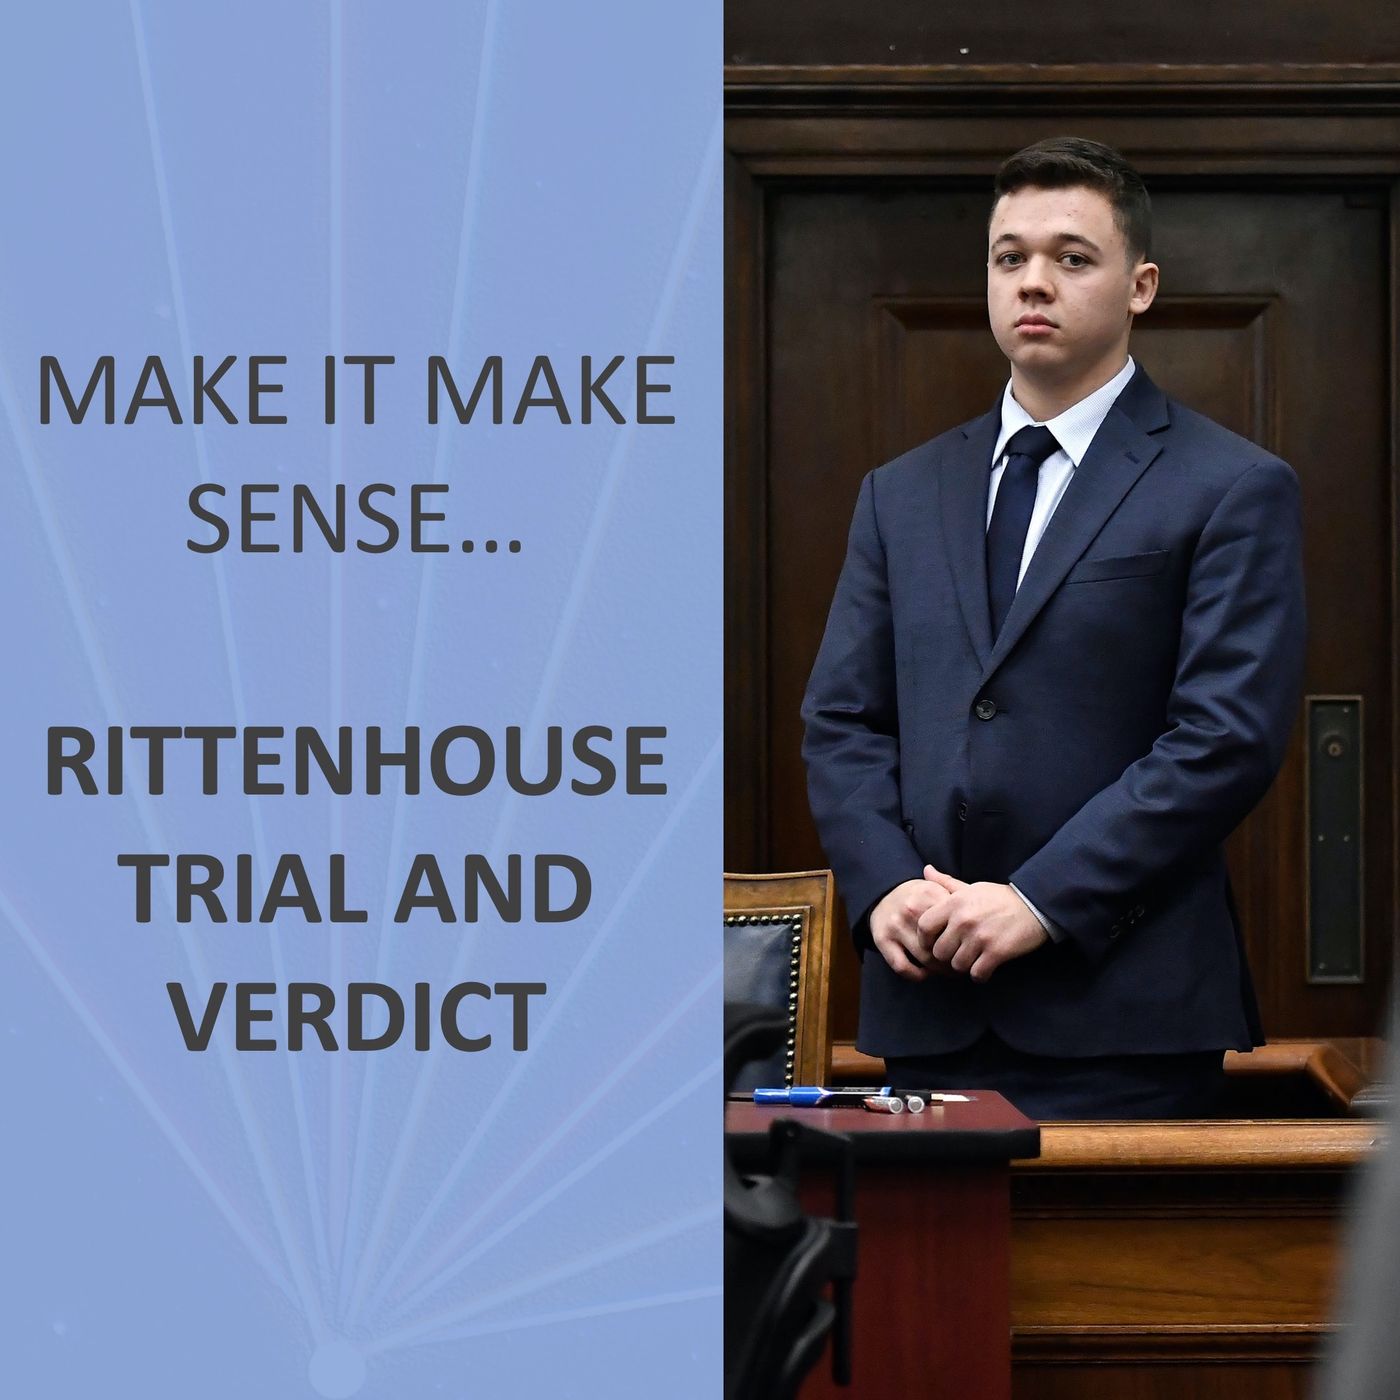 Make it make sense... Rittenhouse Trial and Verdict